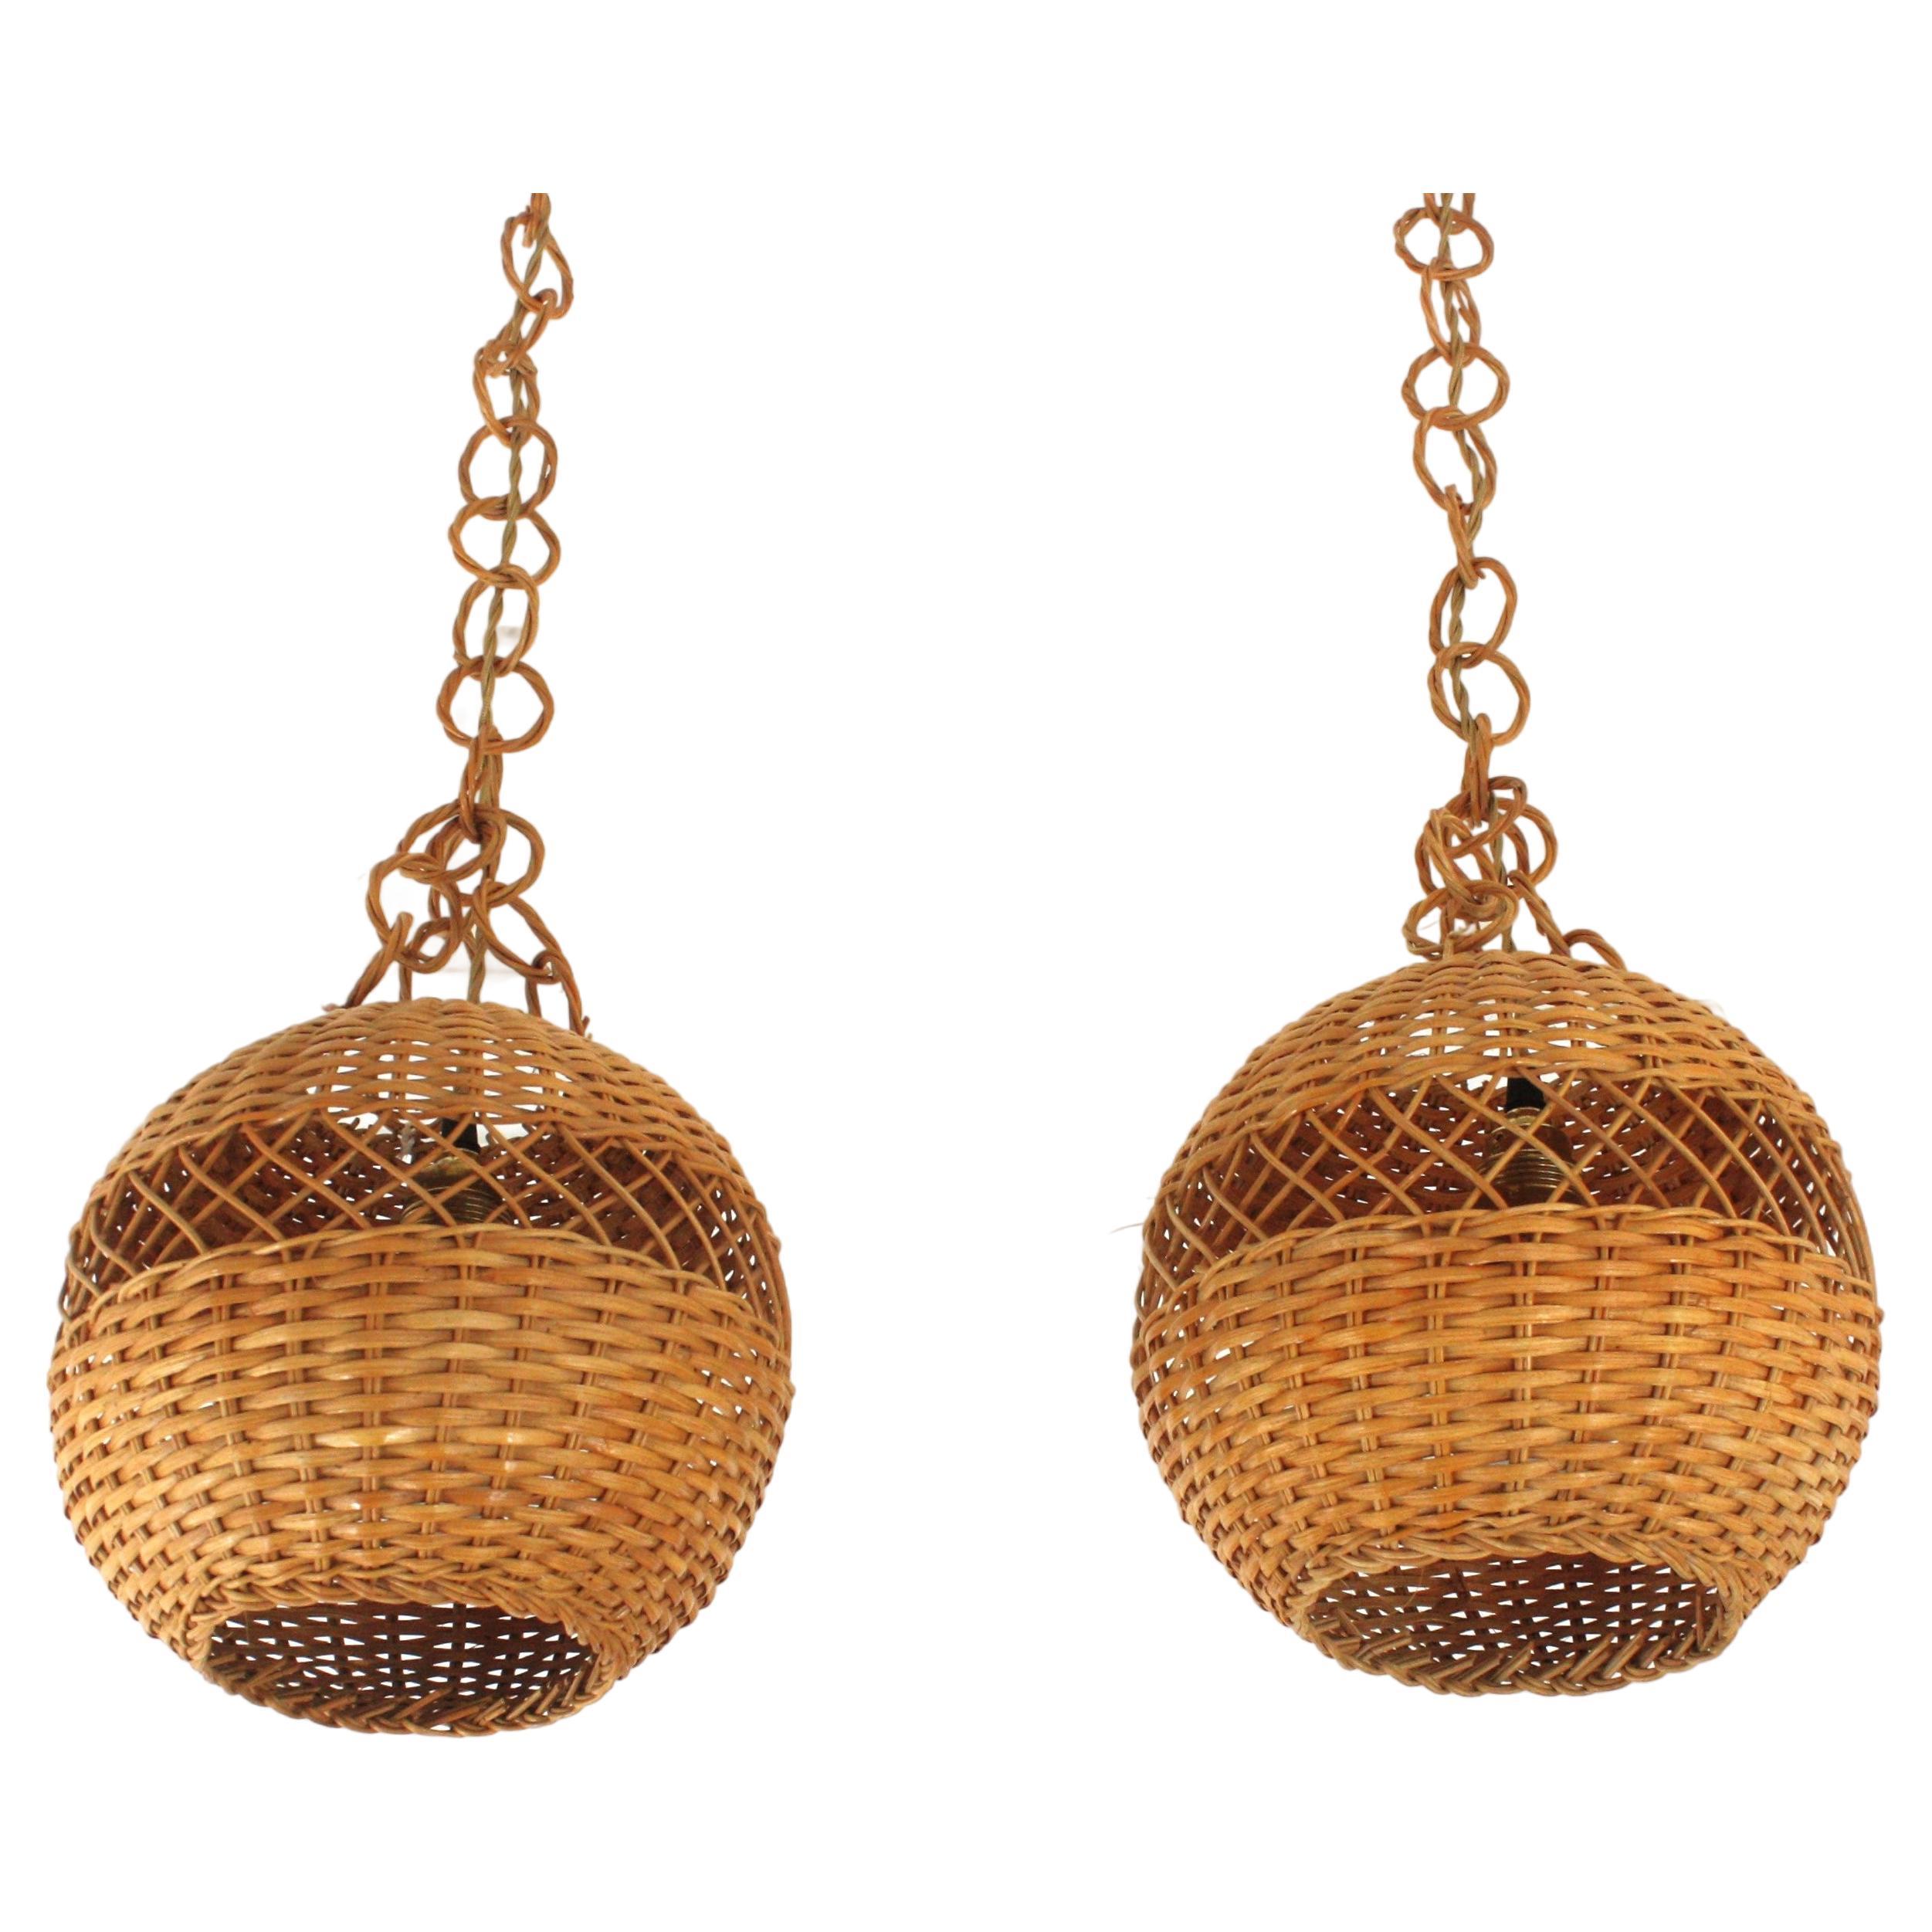 Pair of Handwoven Wicker Globe Pendant Lights or Lanterns